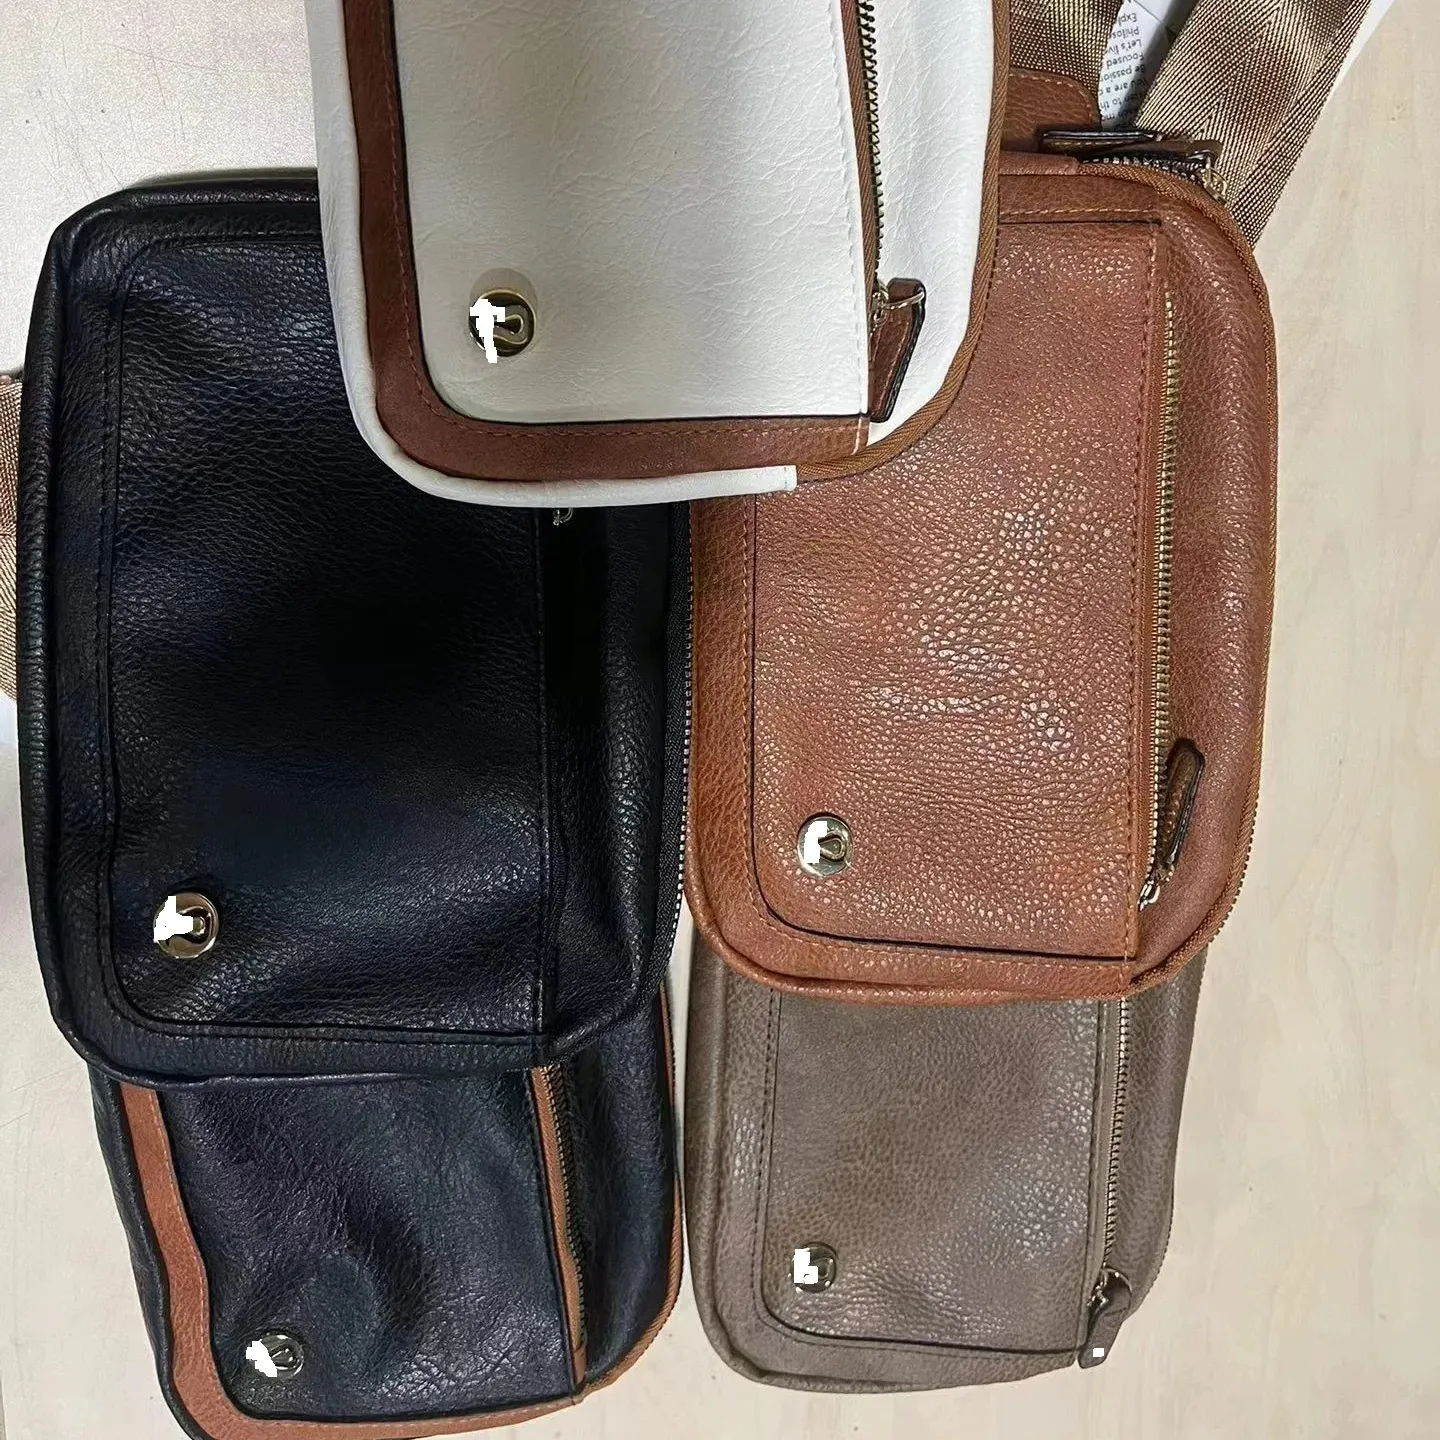 F05 lulu tas selempang kulit imitasi wanita, tas ikat pinggang kulit imitasi dengan Label logam yang dapat disesuaikan, tas selempang Mini untuk wanita